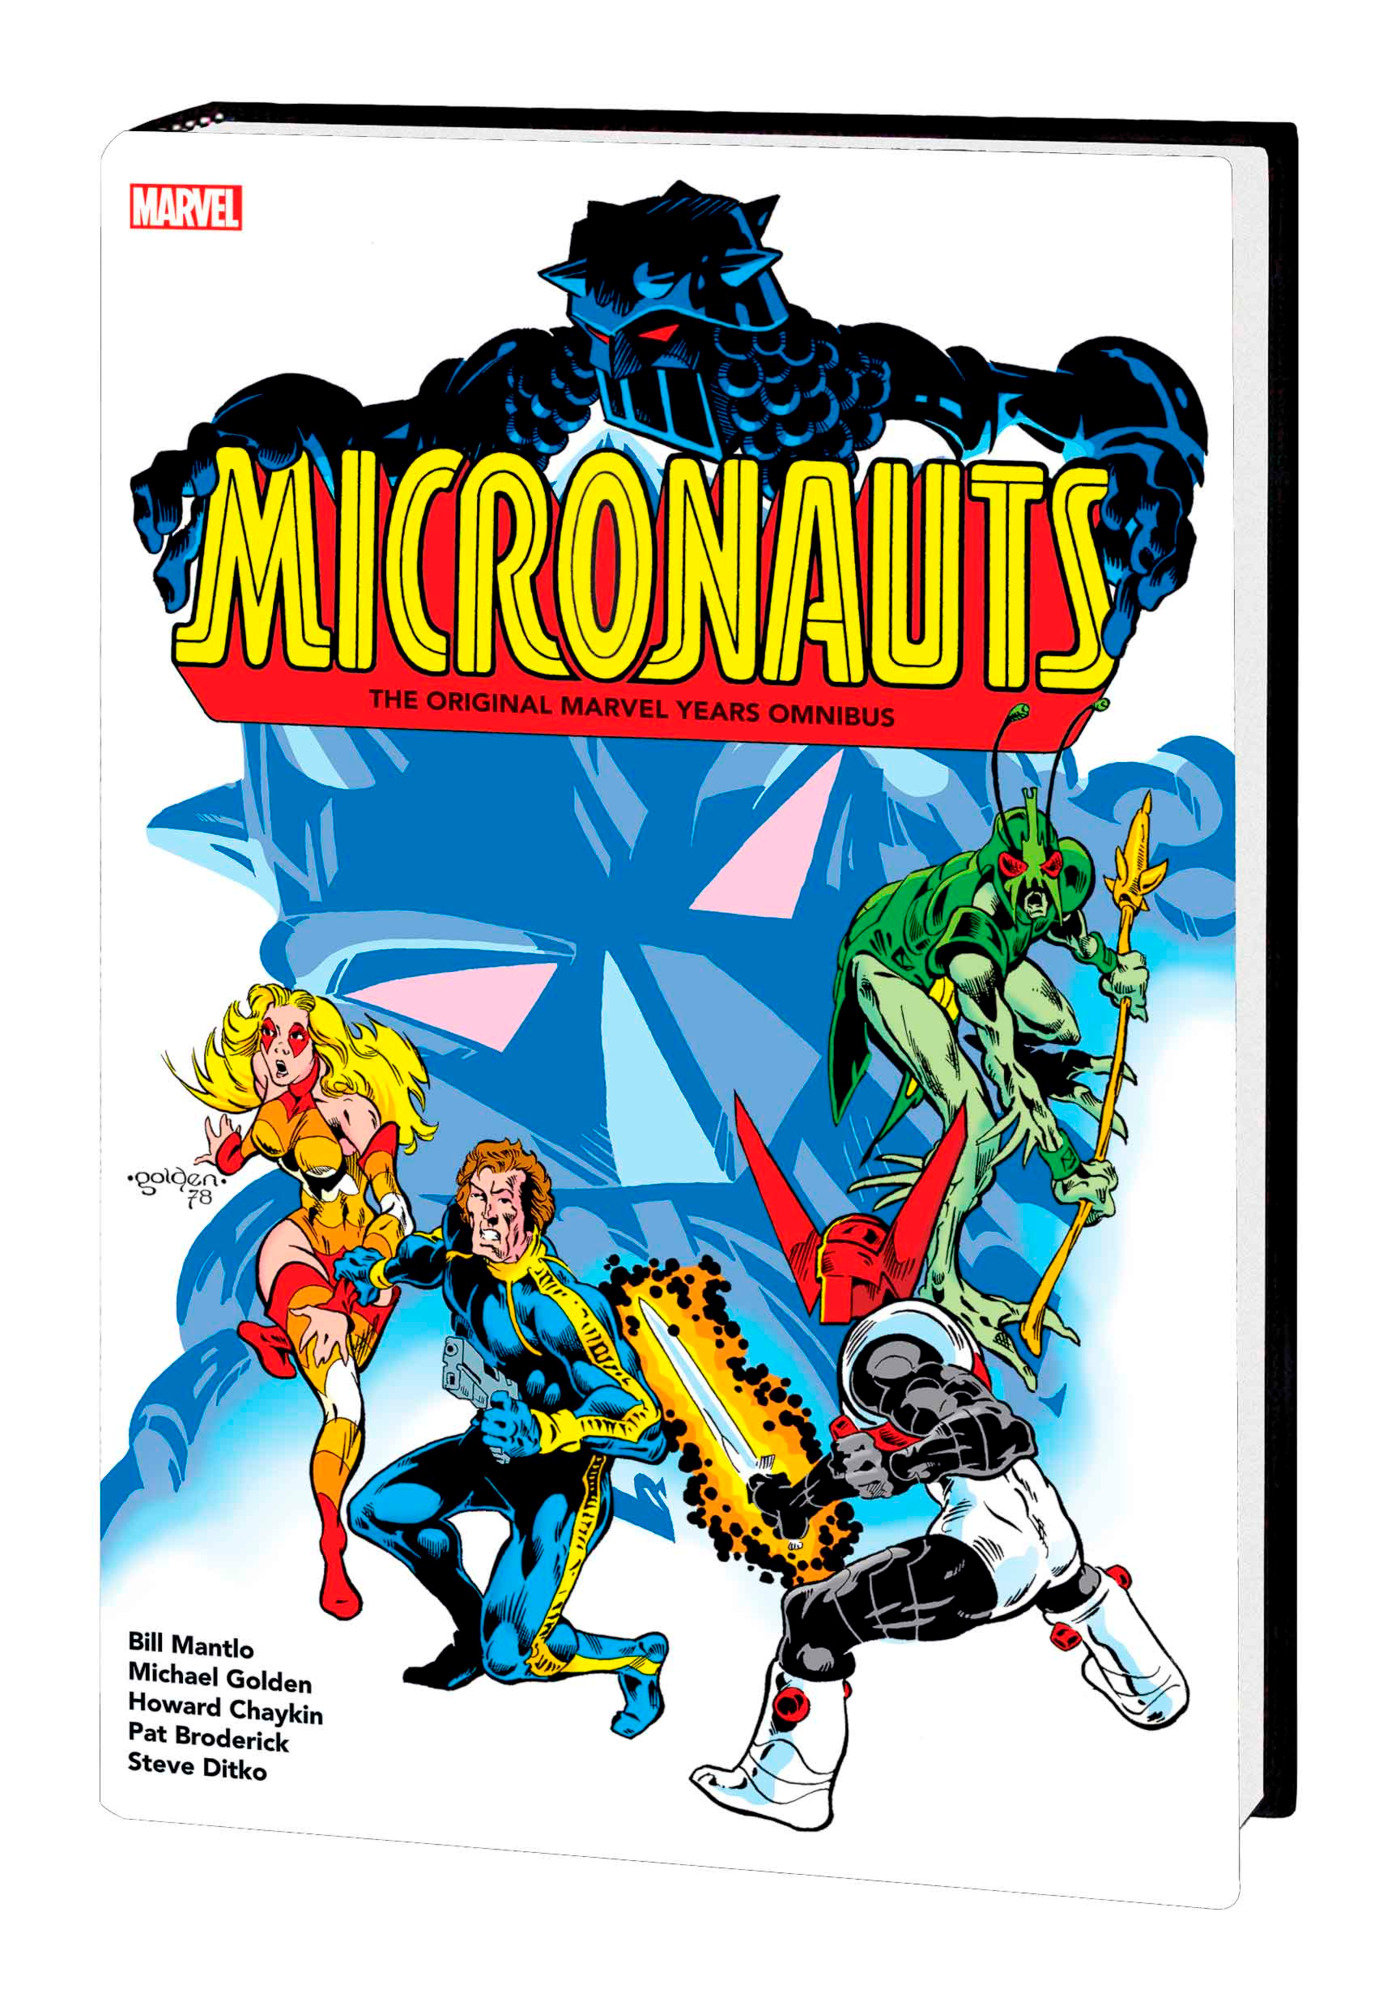 Micronauts: The Original Marvel Years Omnibus Hardcover Volume 1 Golden Cover (Direct Market Variant)